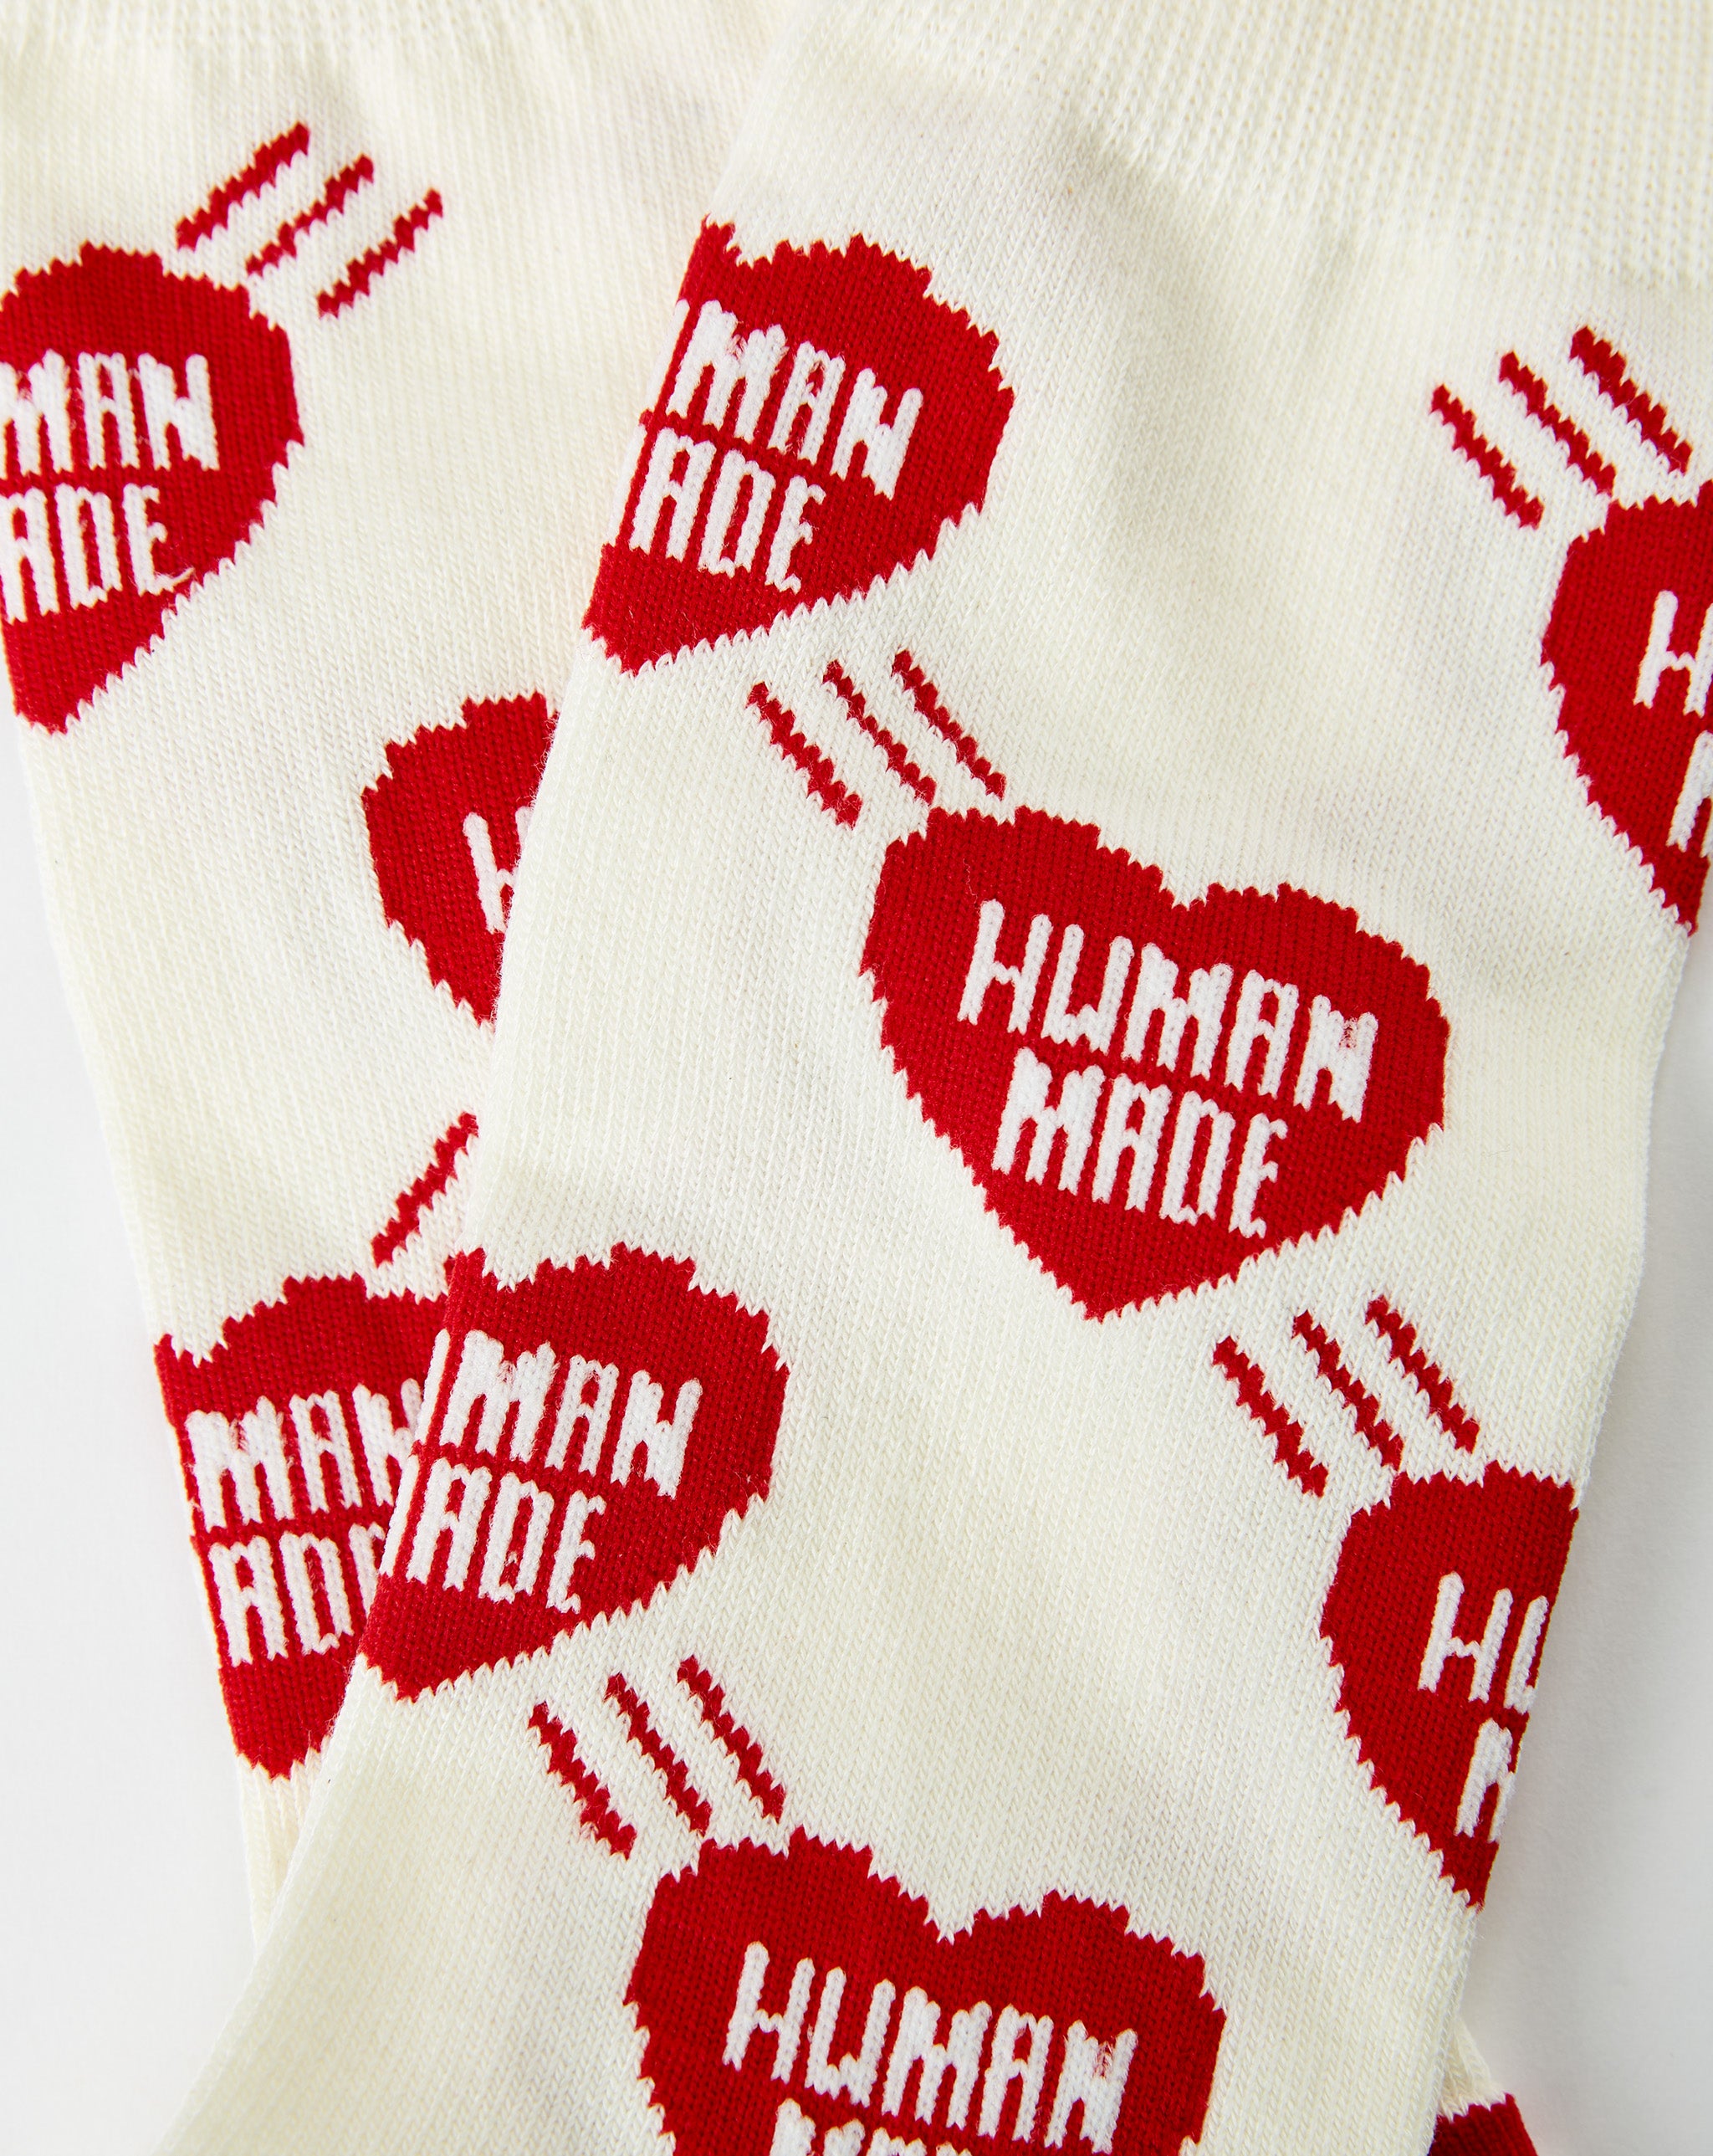 Human Made Heart Socks  - Cheap Cerbe Jordan outlet